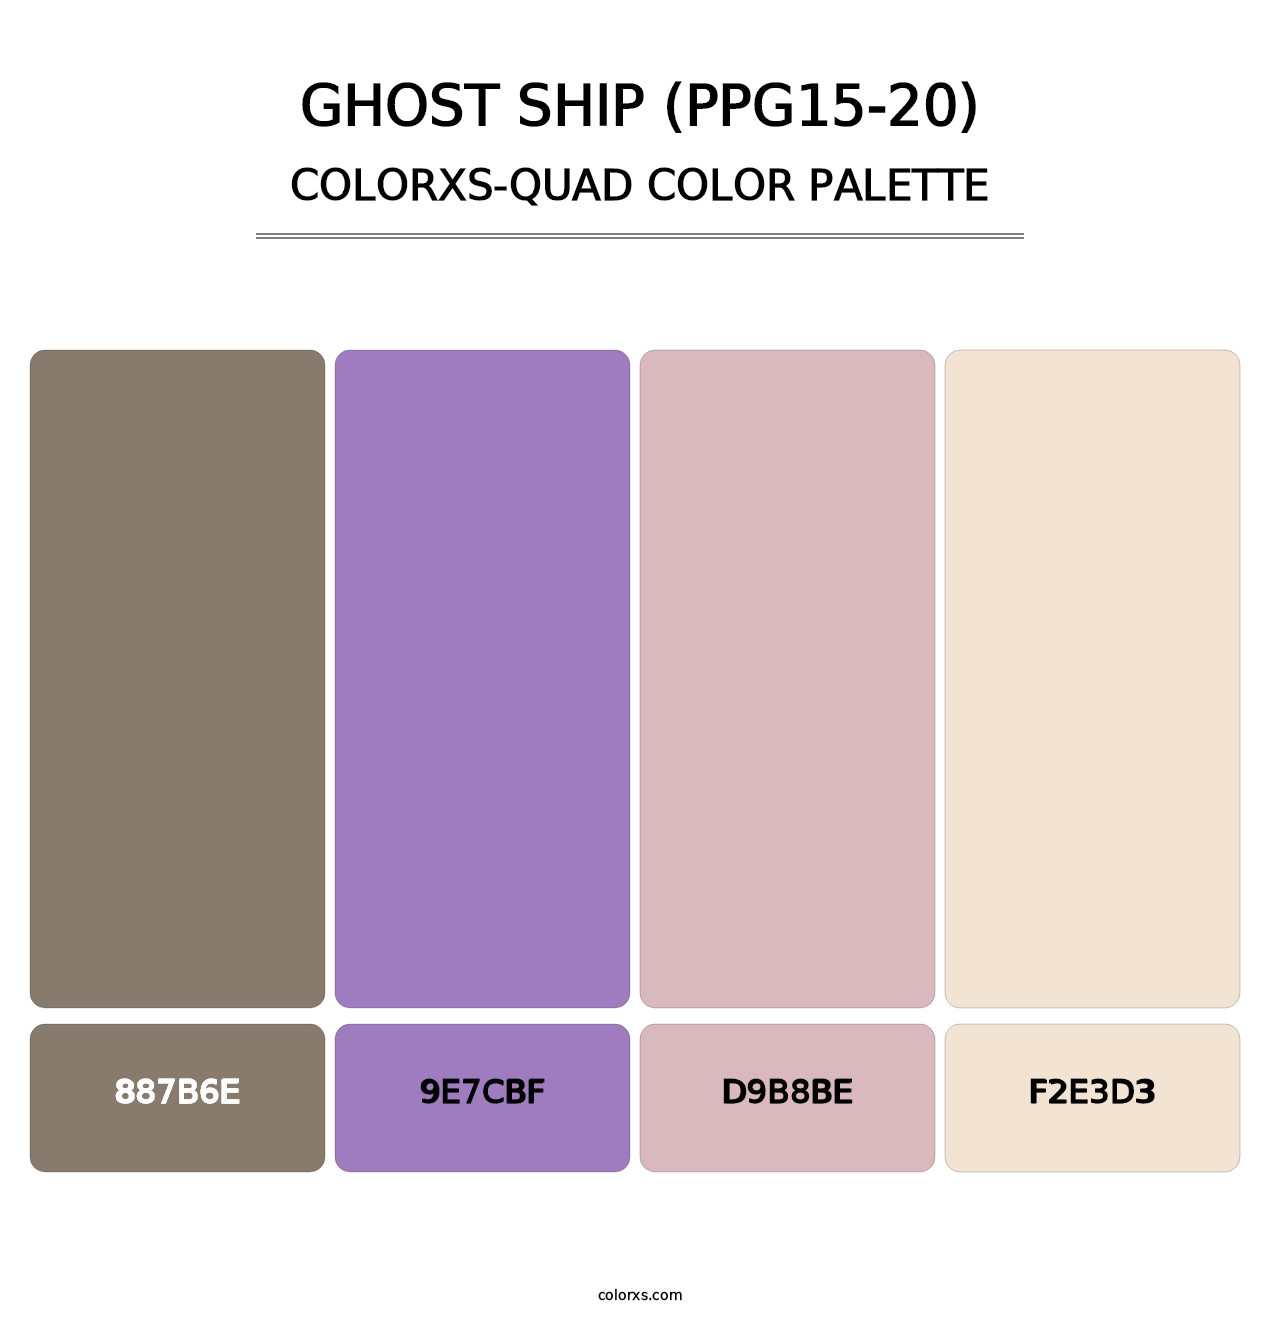 Ghost Ship (PPG15-20) - Colorxs Quad Palette